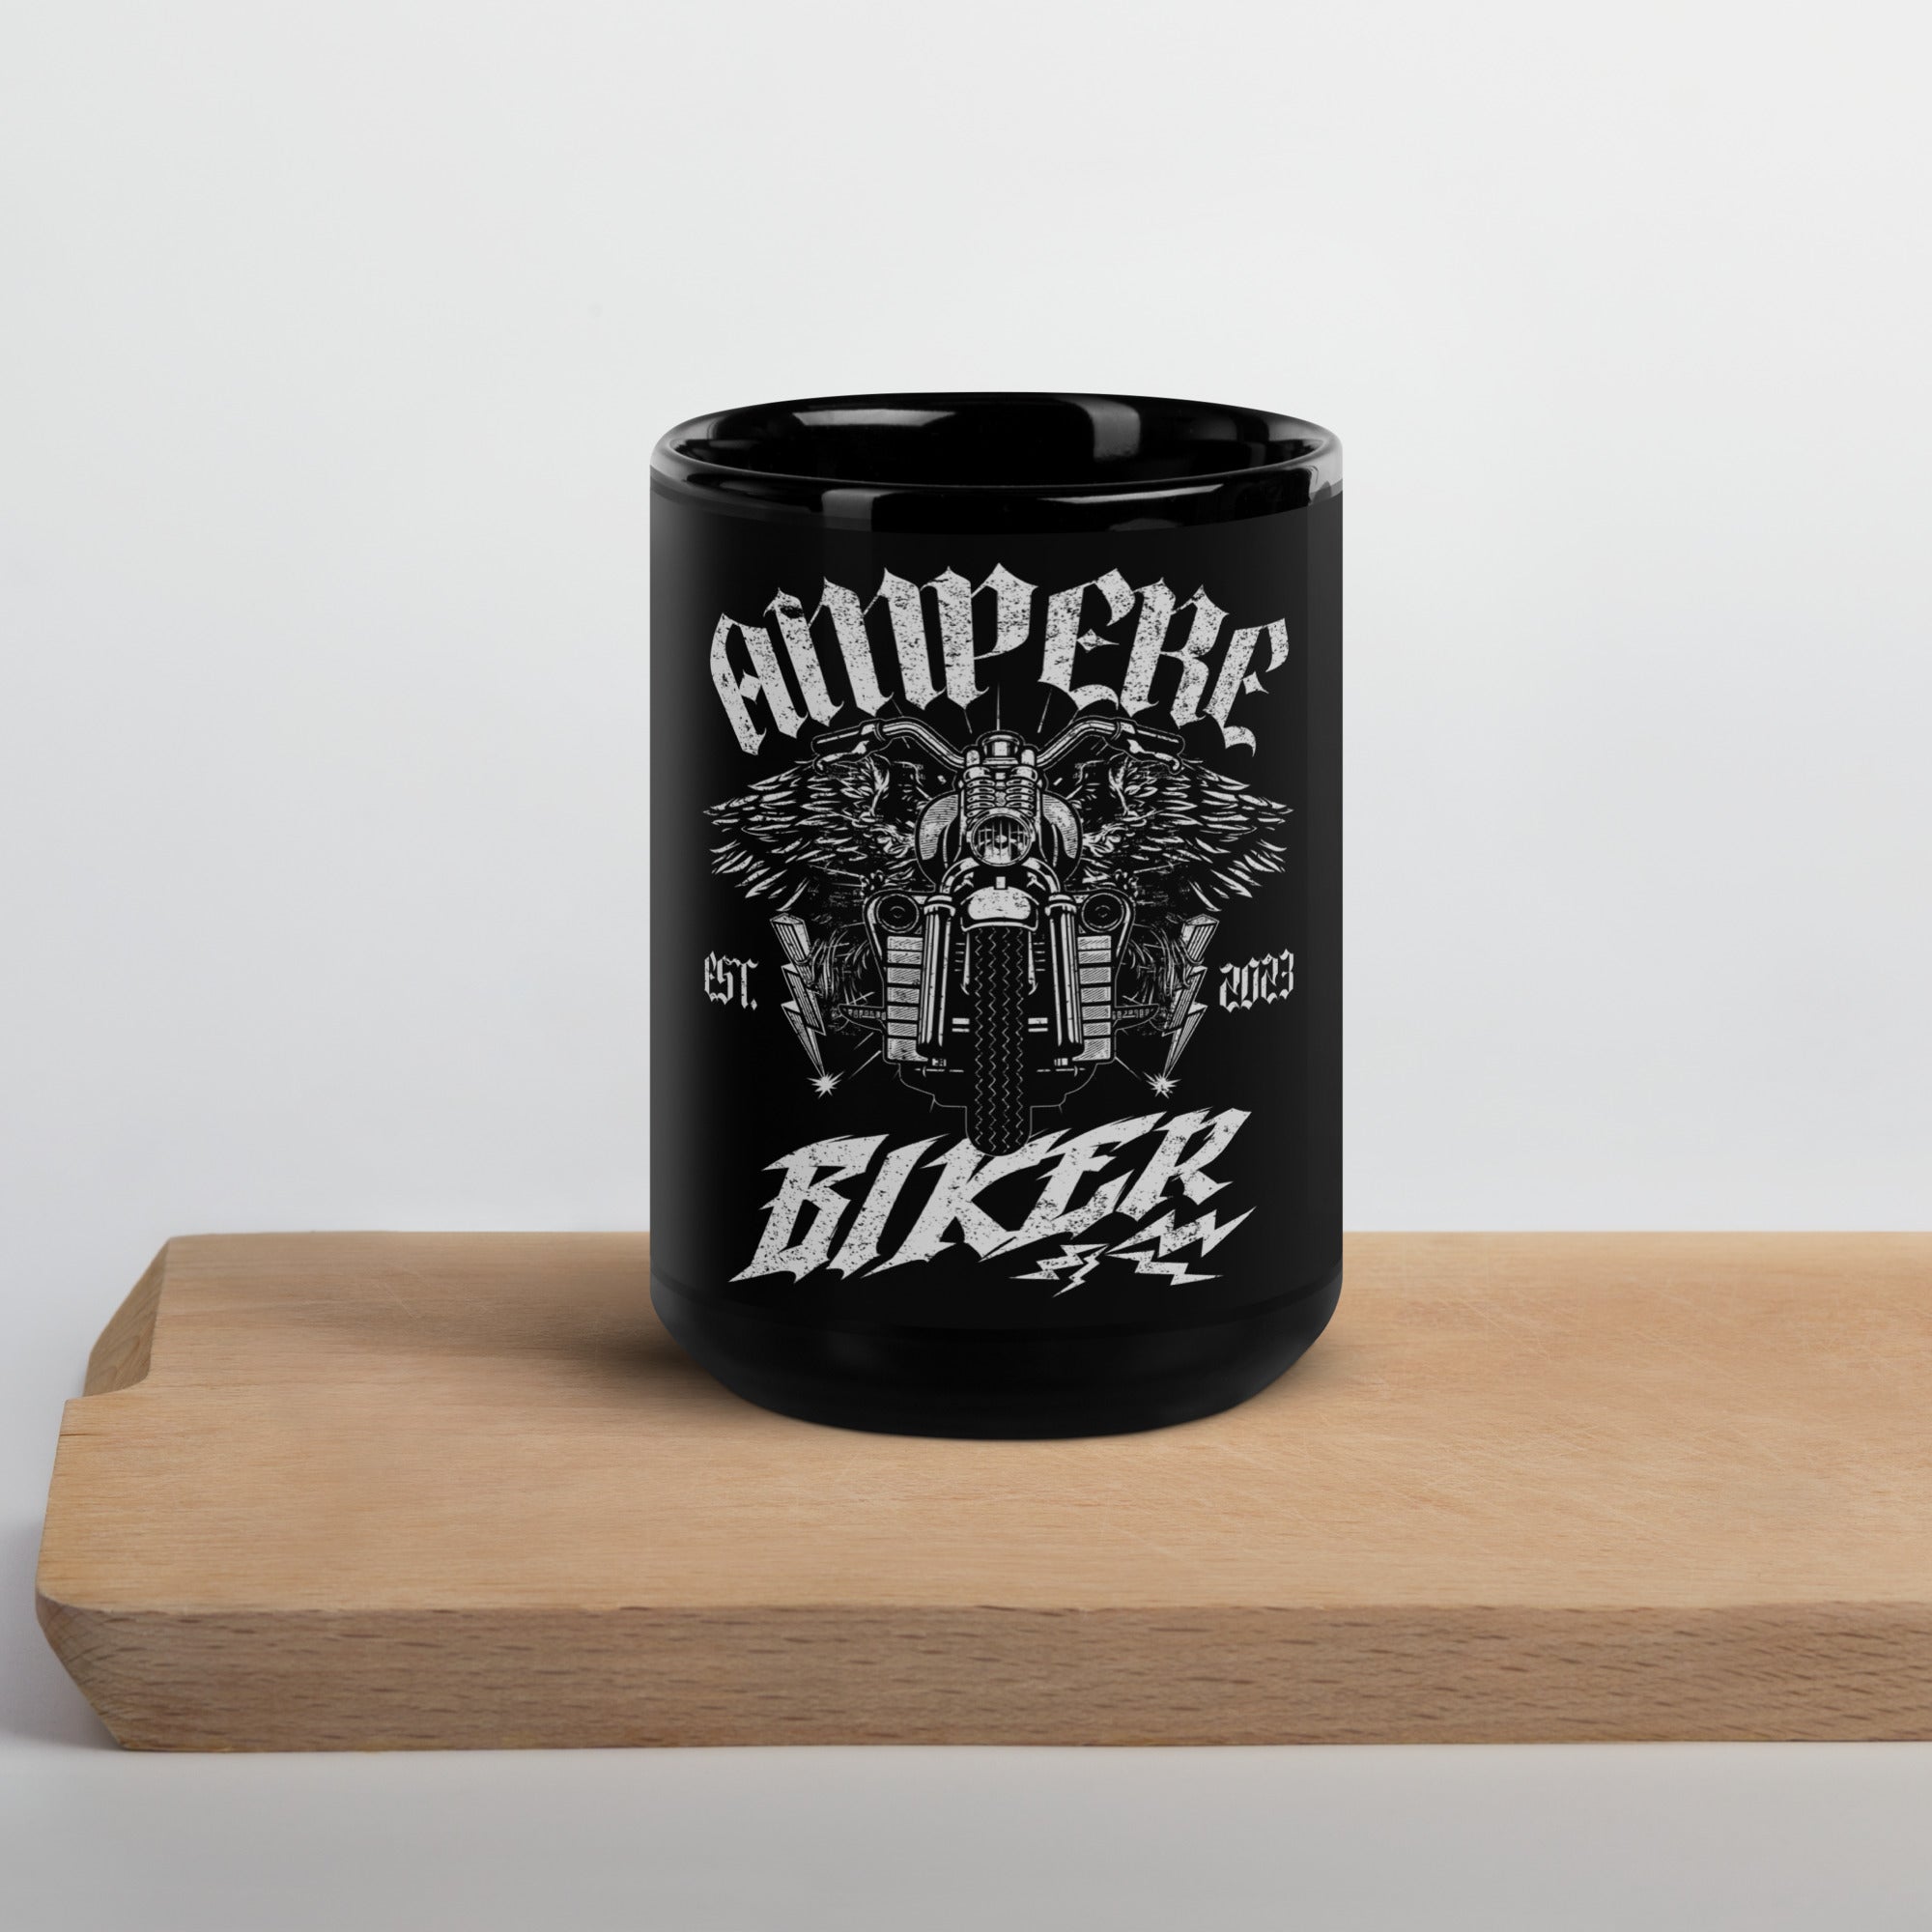 Ampere-Biker Kaffeetasse